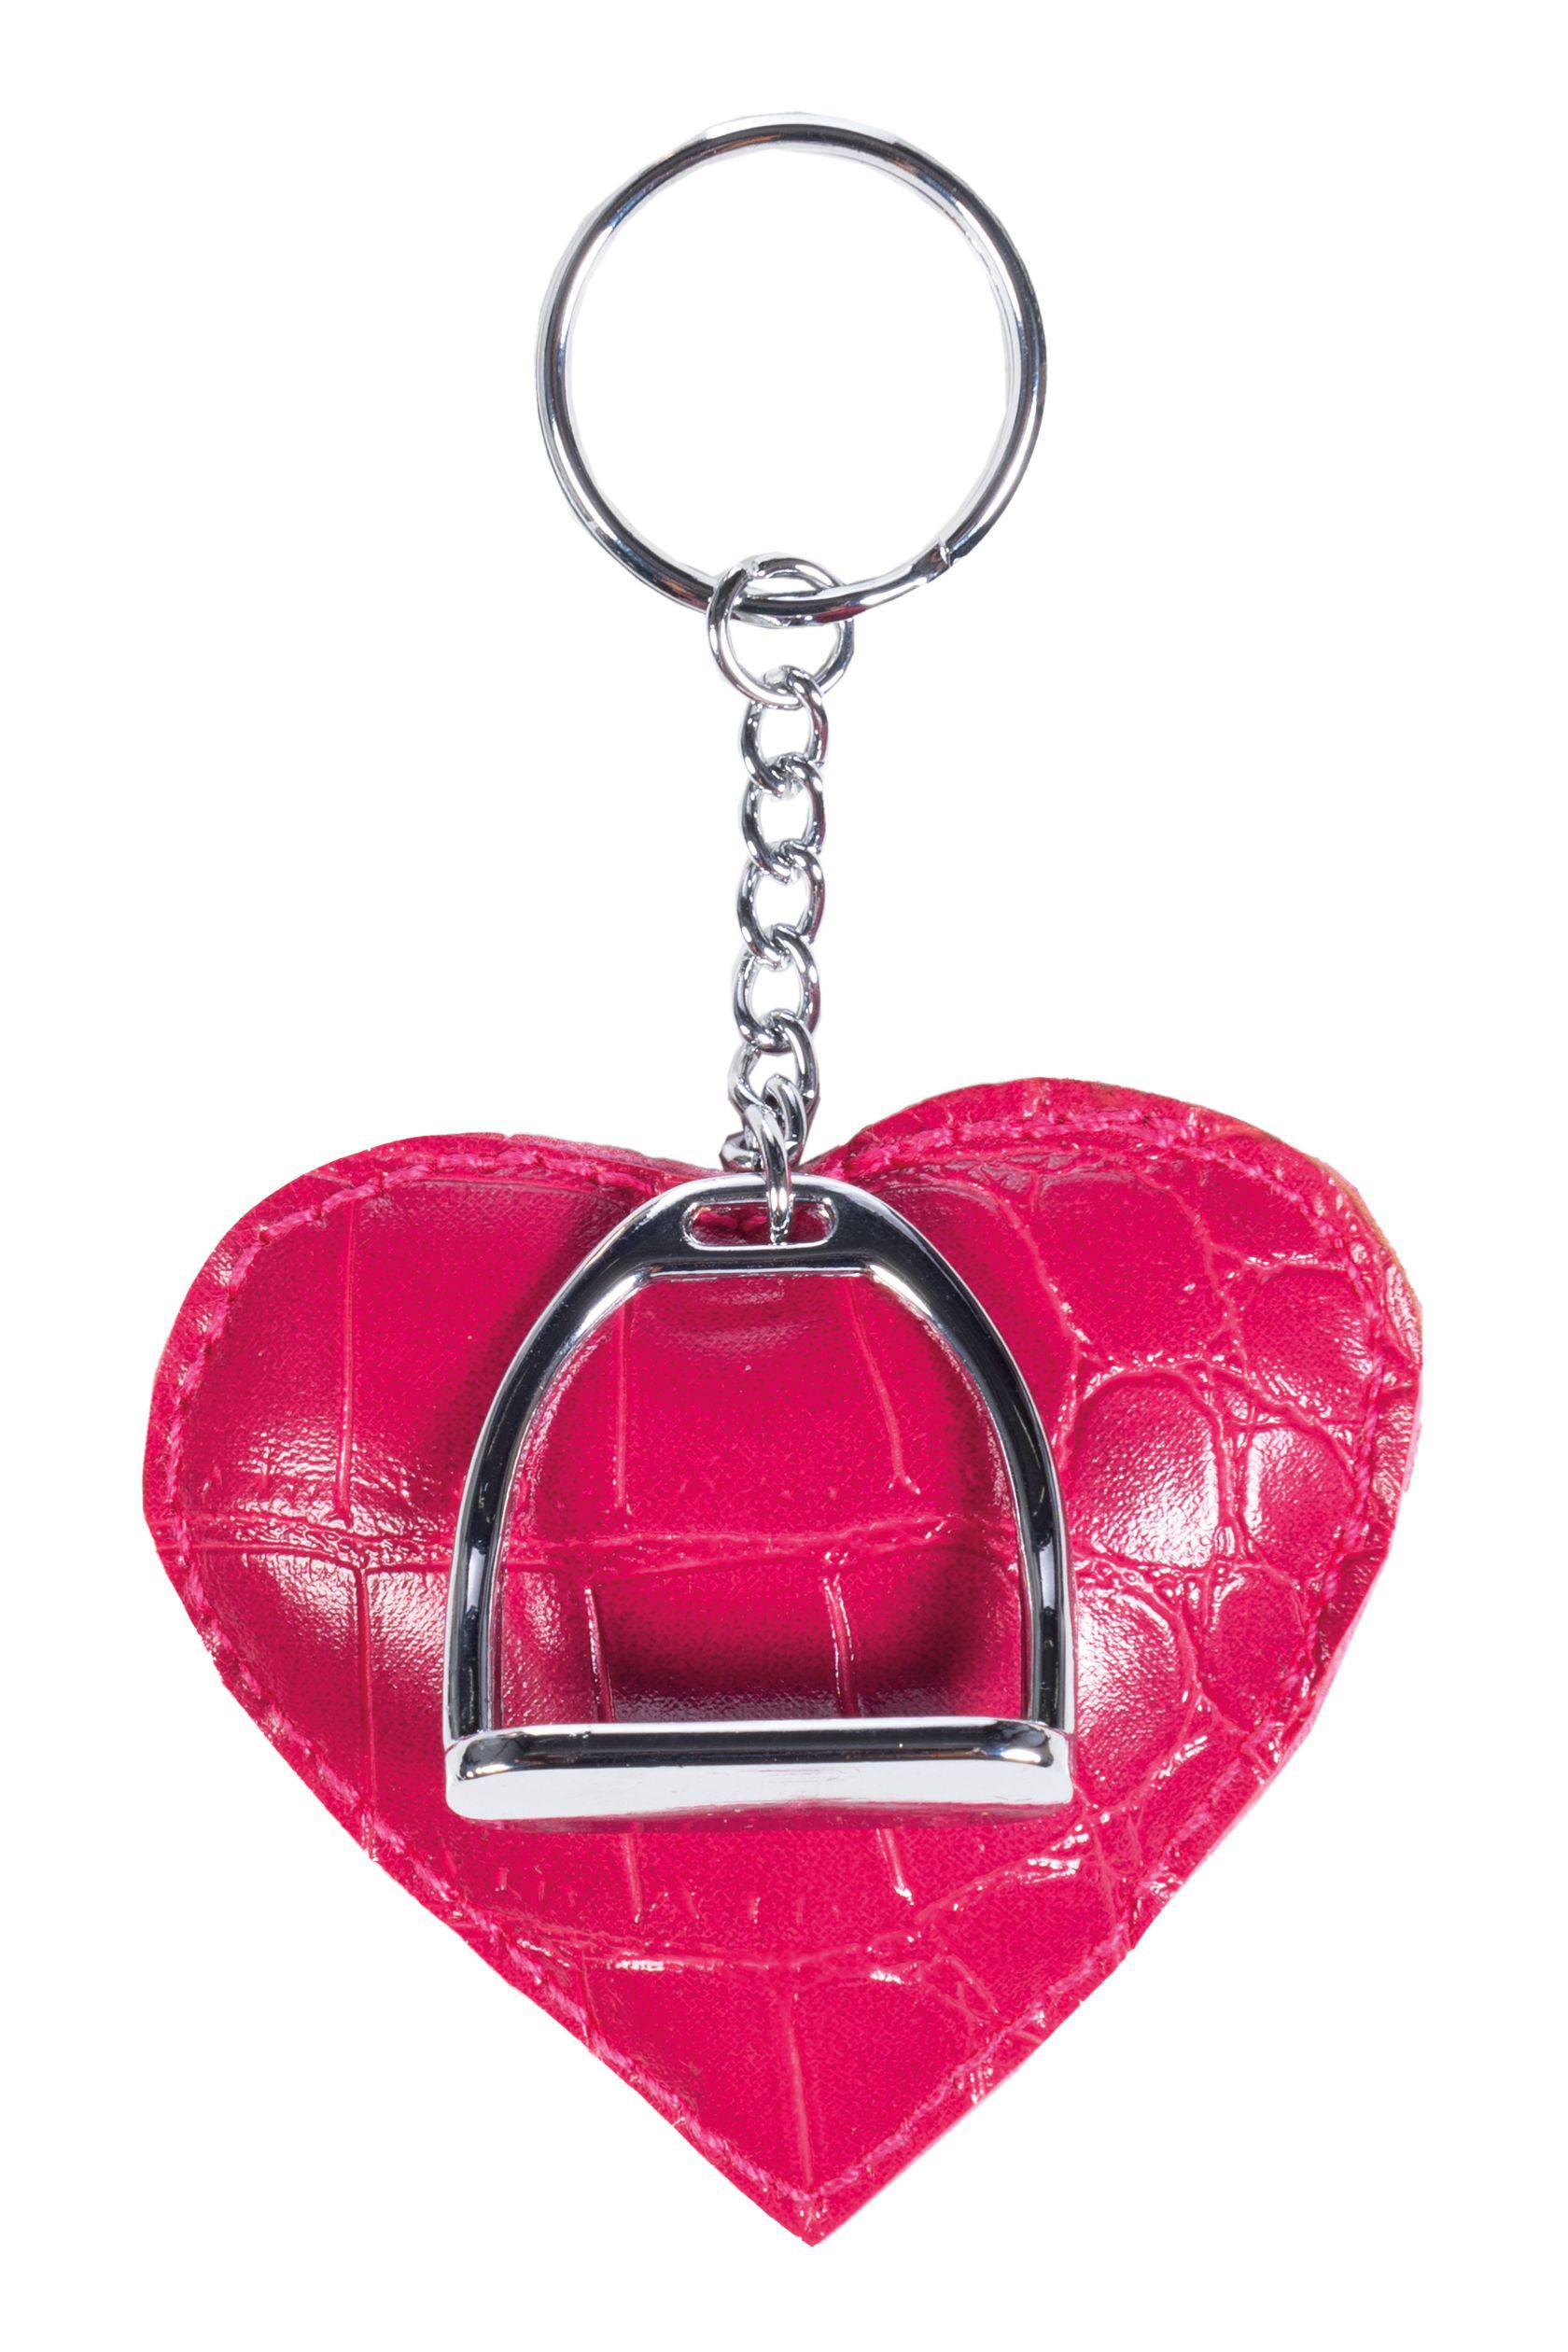 Sweet Valentine Key Ring - Equine Exchange Tack Shop